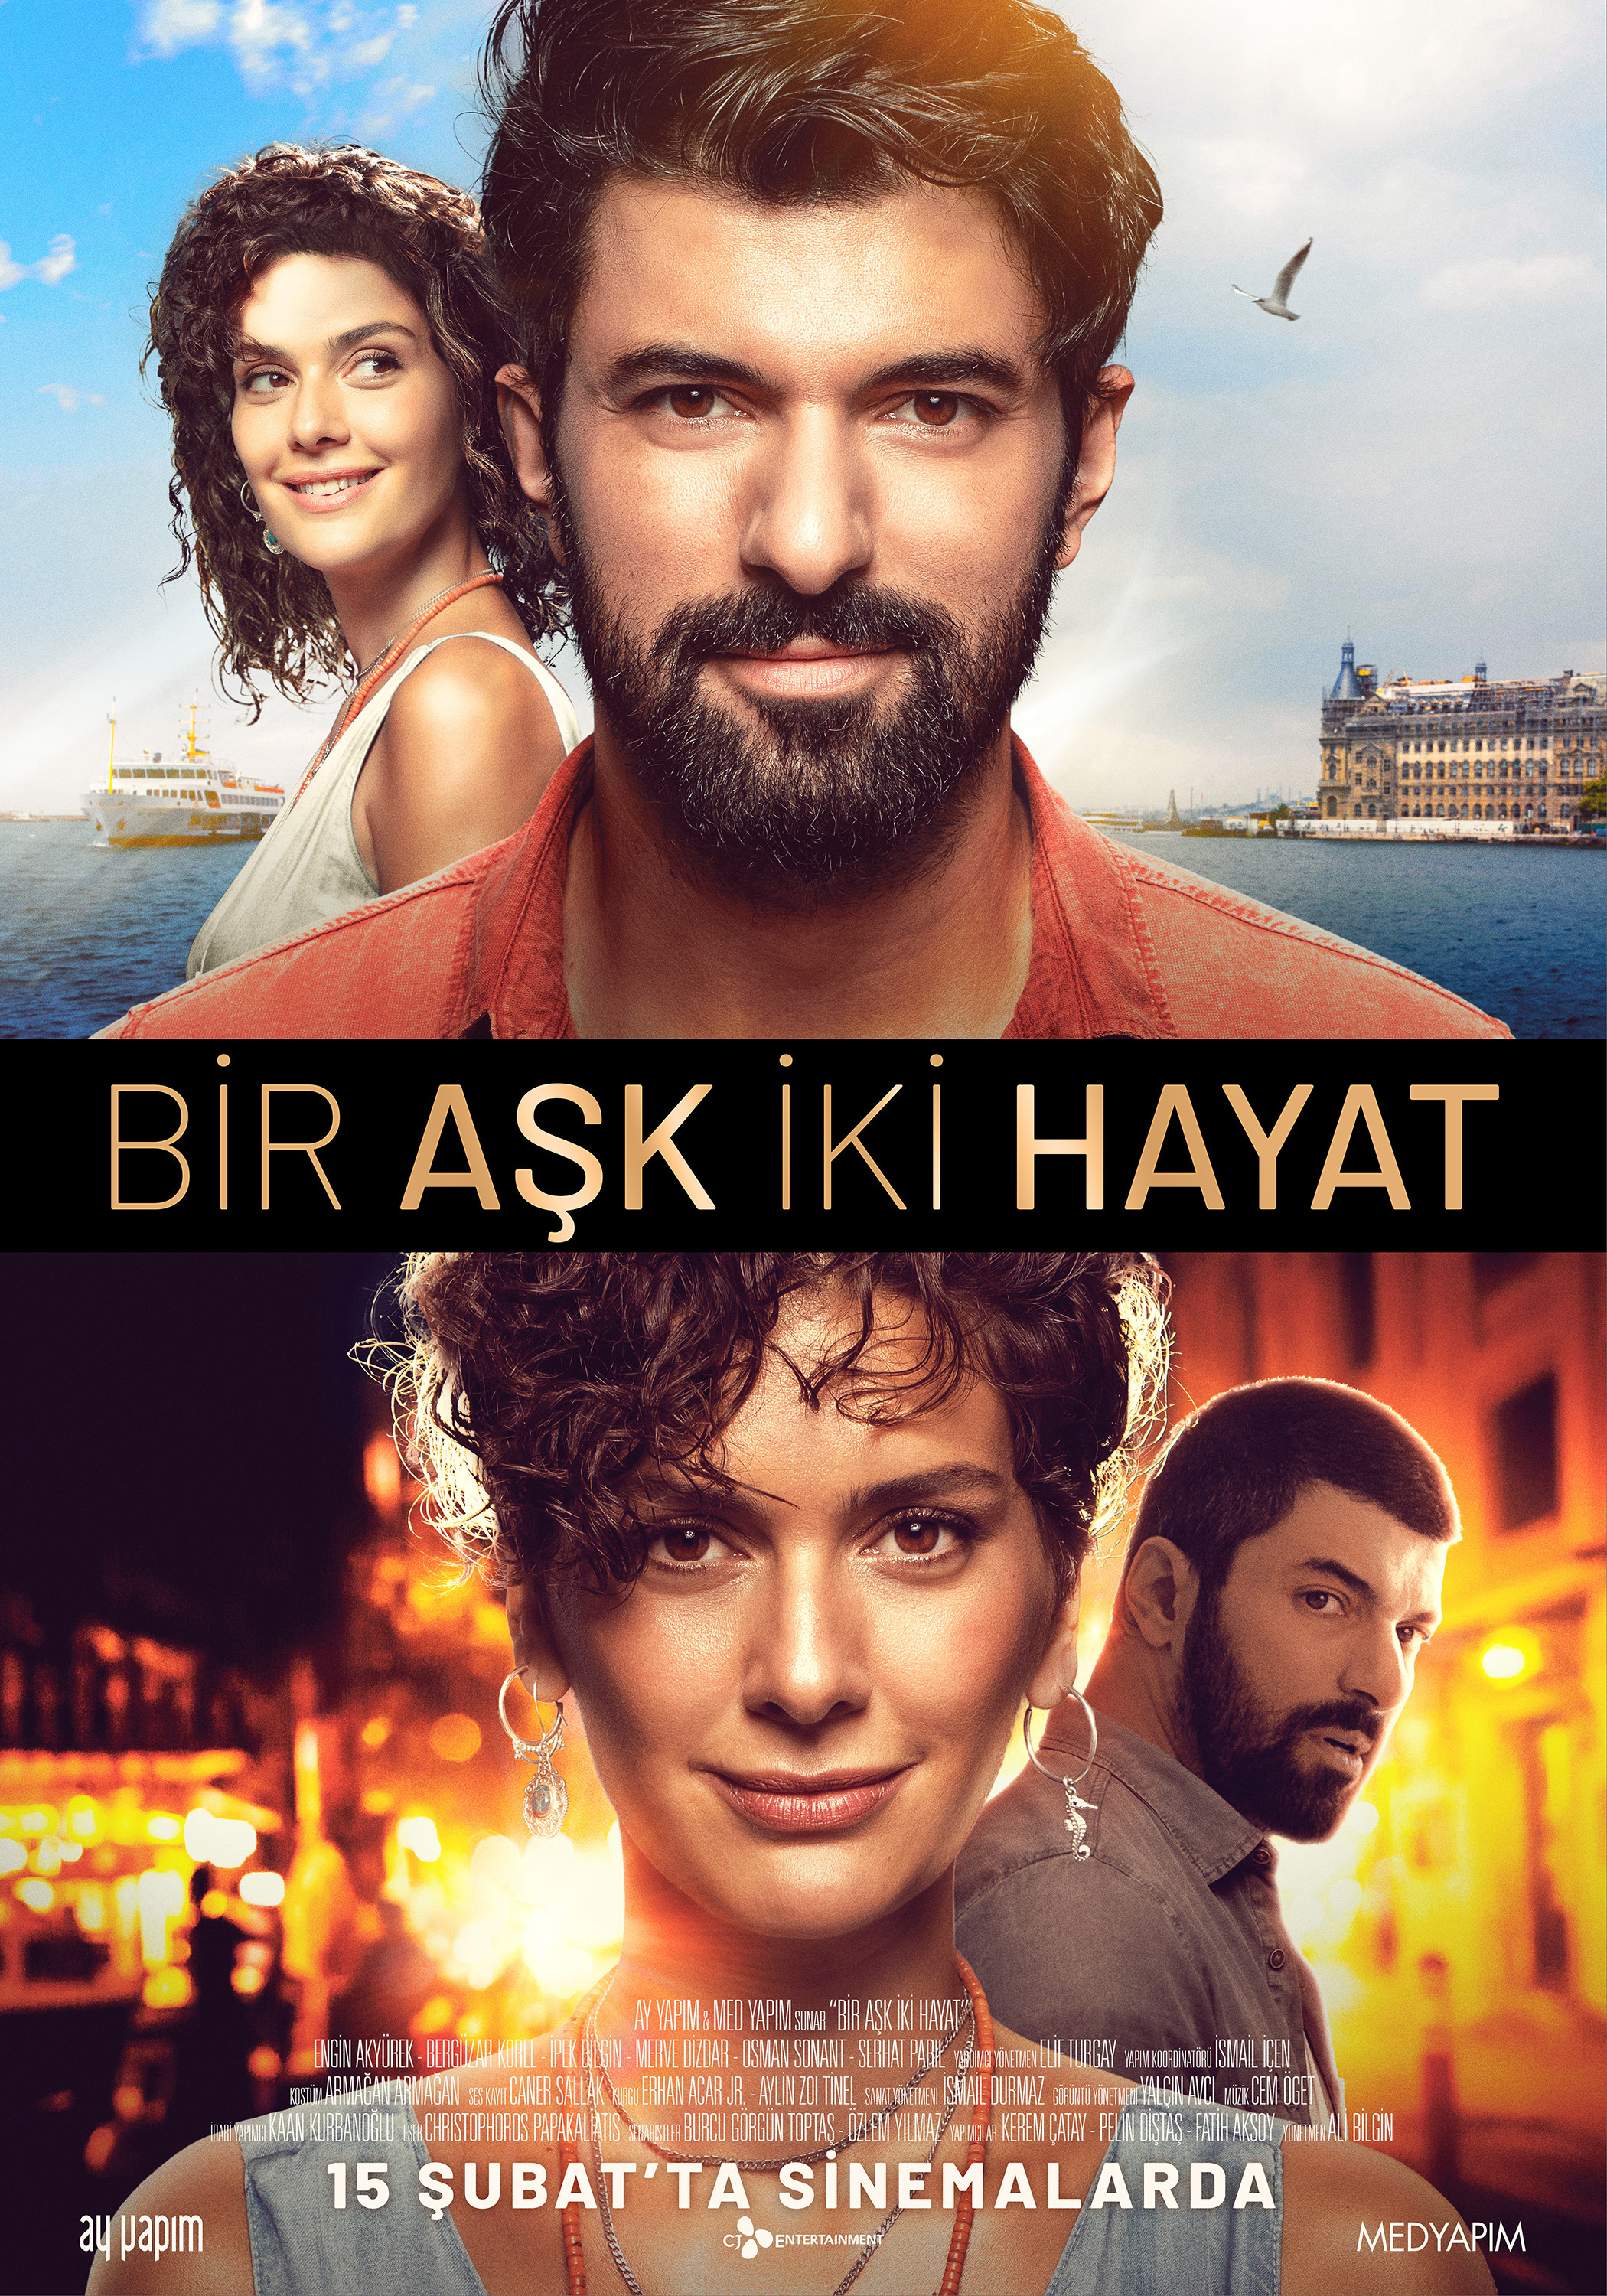 Mega Sized Movie Poster Image for Bir Ask Iki Hayat (#1 of 3)